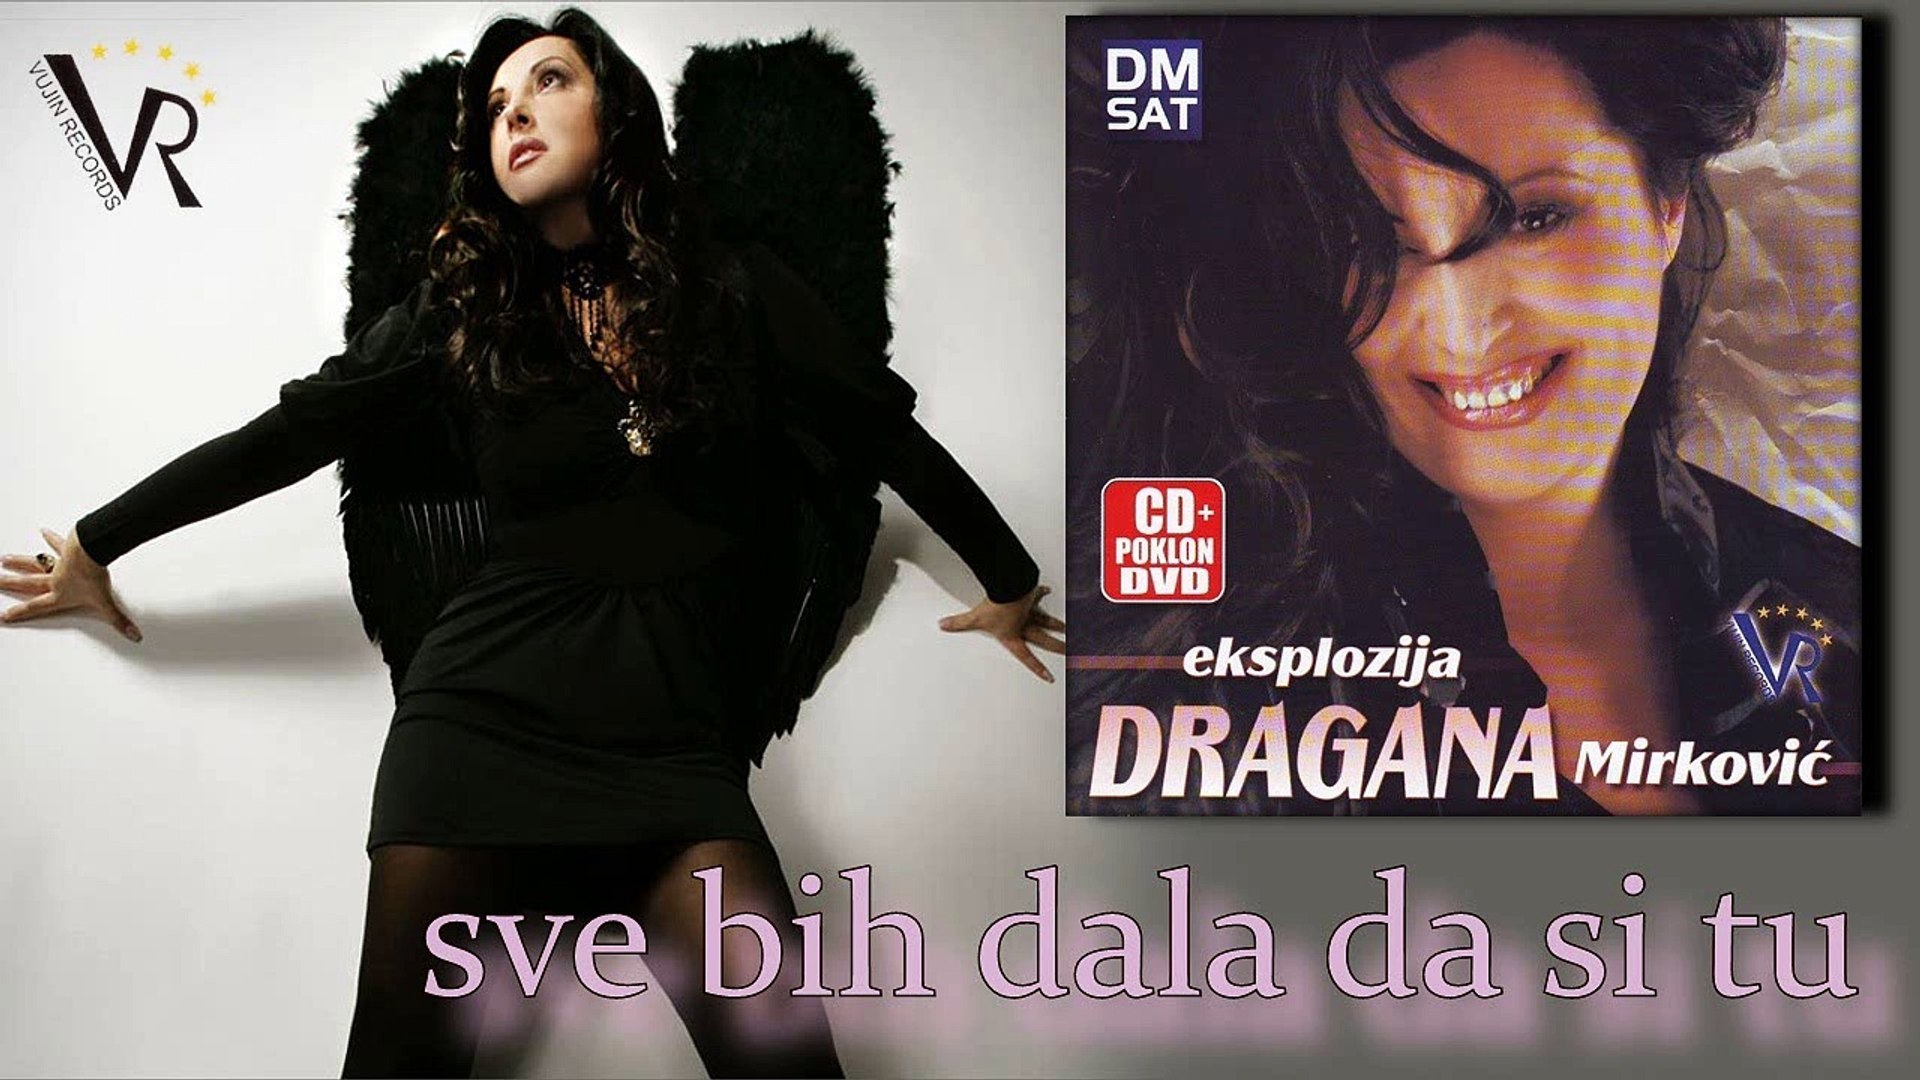 Dragana Mirkovic - Sve bih dala da si tu - (Audio 2008) - video Dailymotion